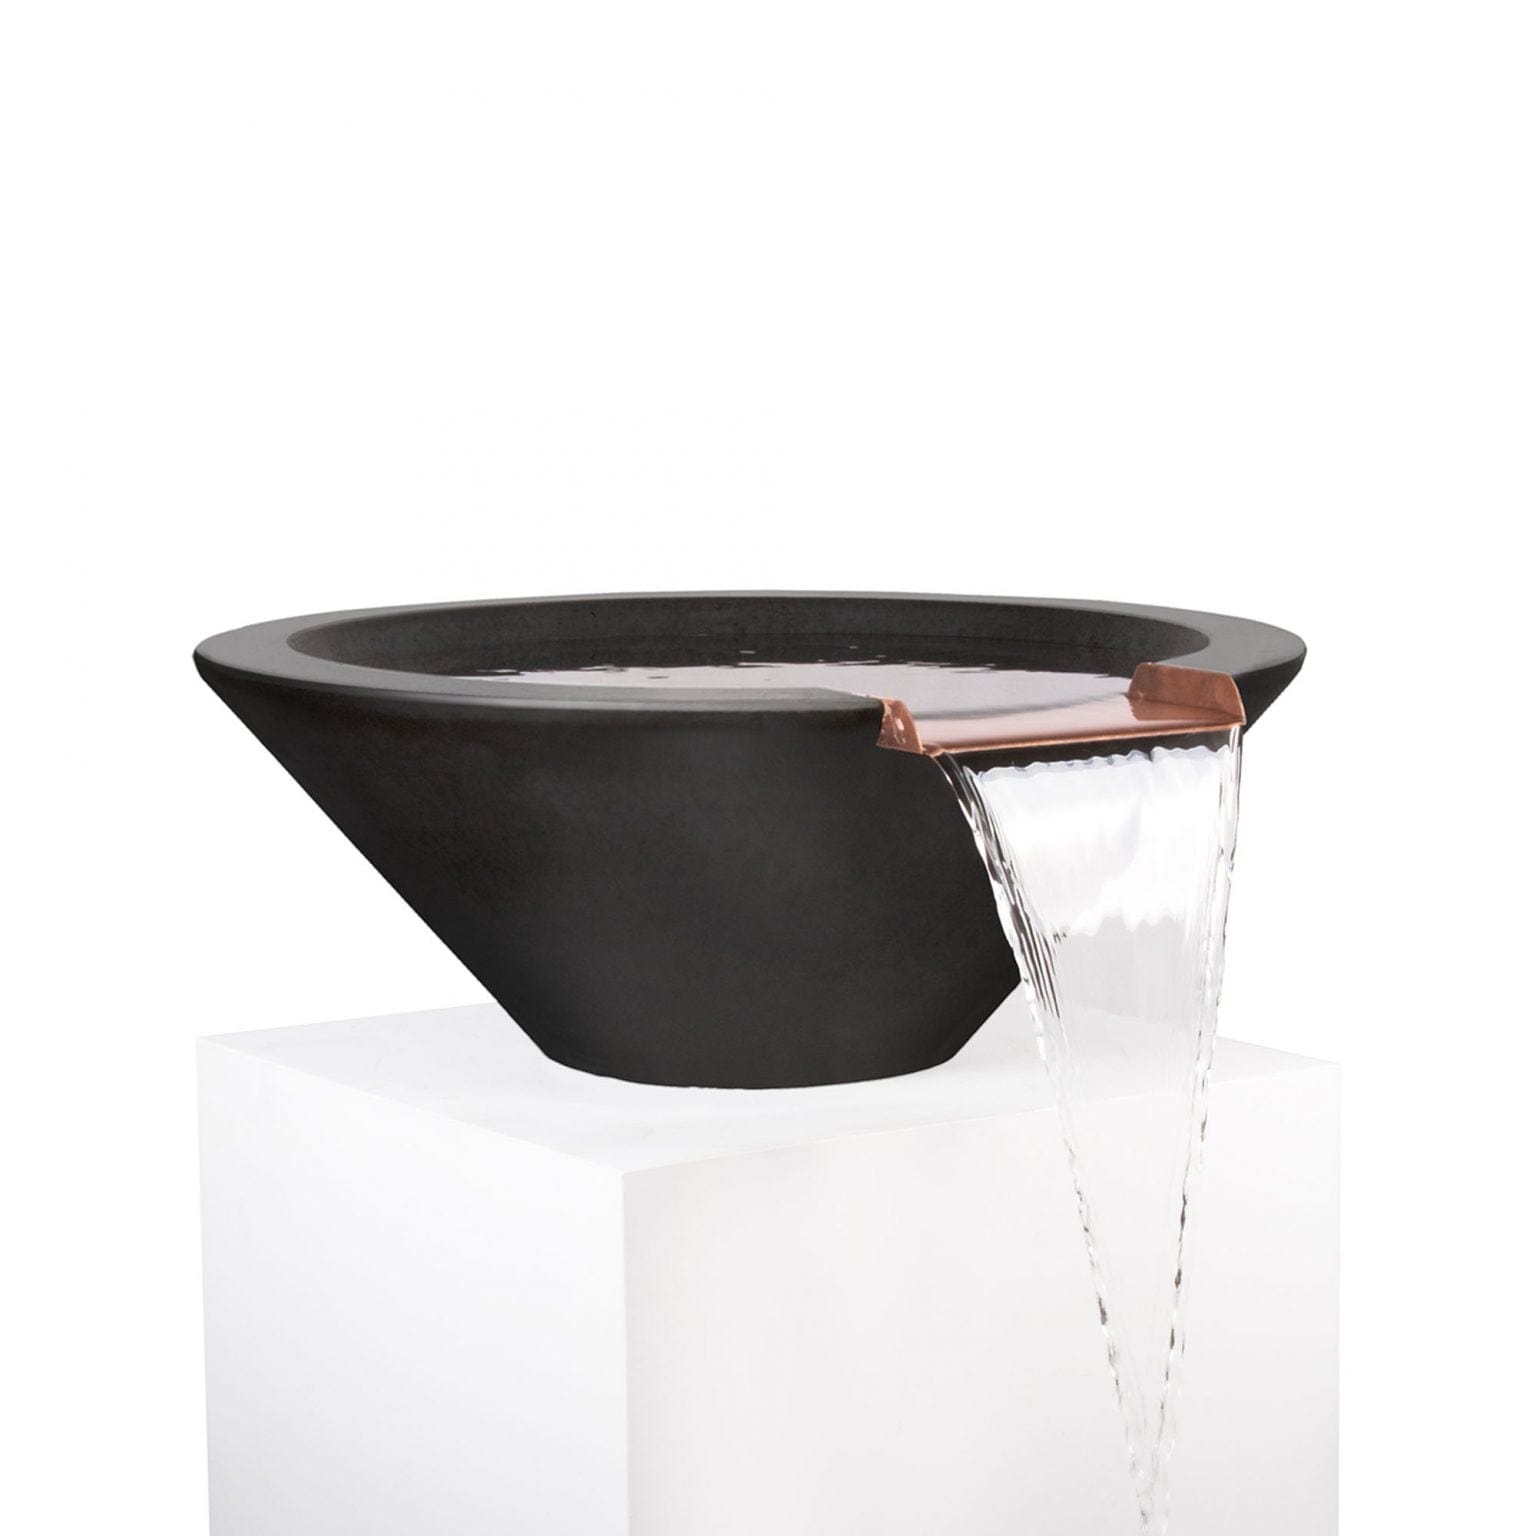 The Outdoor Plus Water Bowl 31" The Outdoor Plus Cazo Water Bowl | GFRC Concrete OPT-31RWO